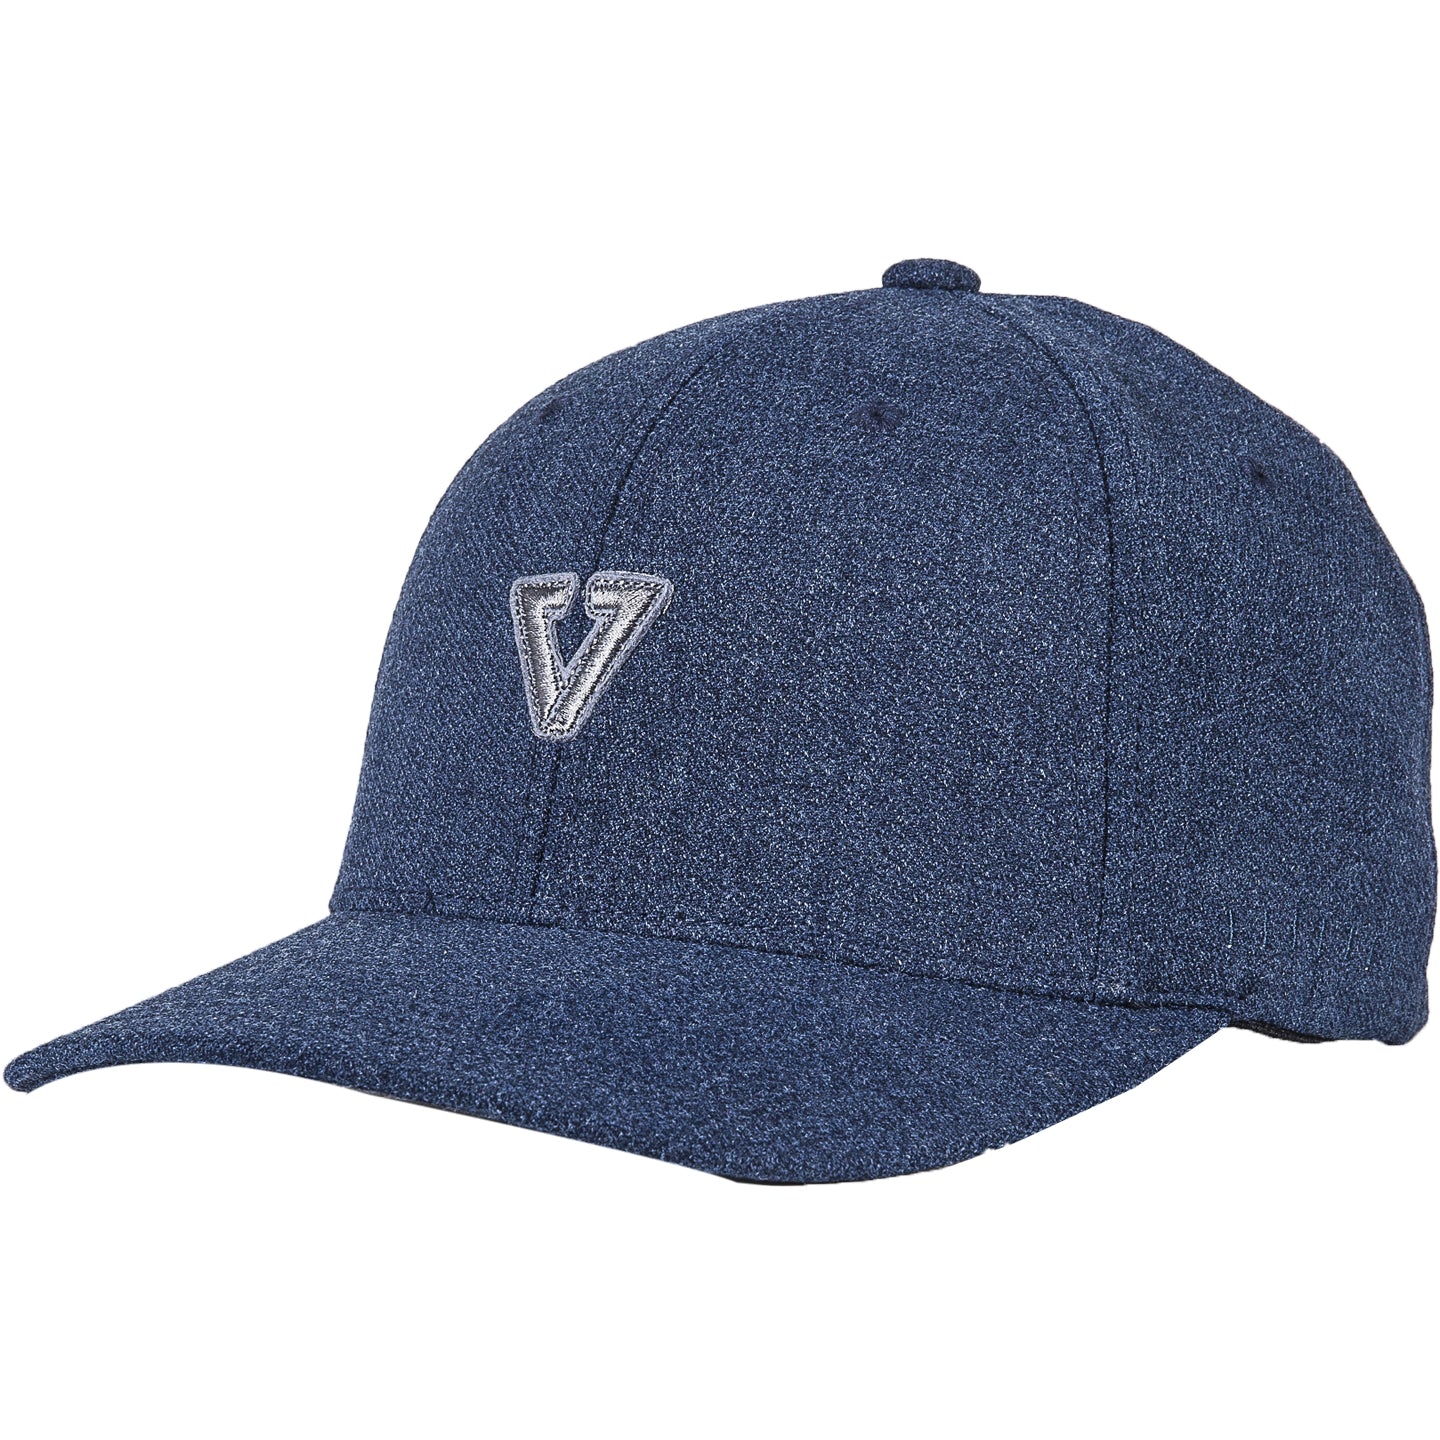 Vissla Men's Replica Hat NVY OS